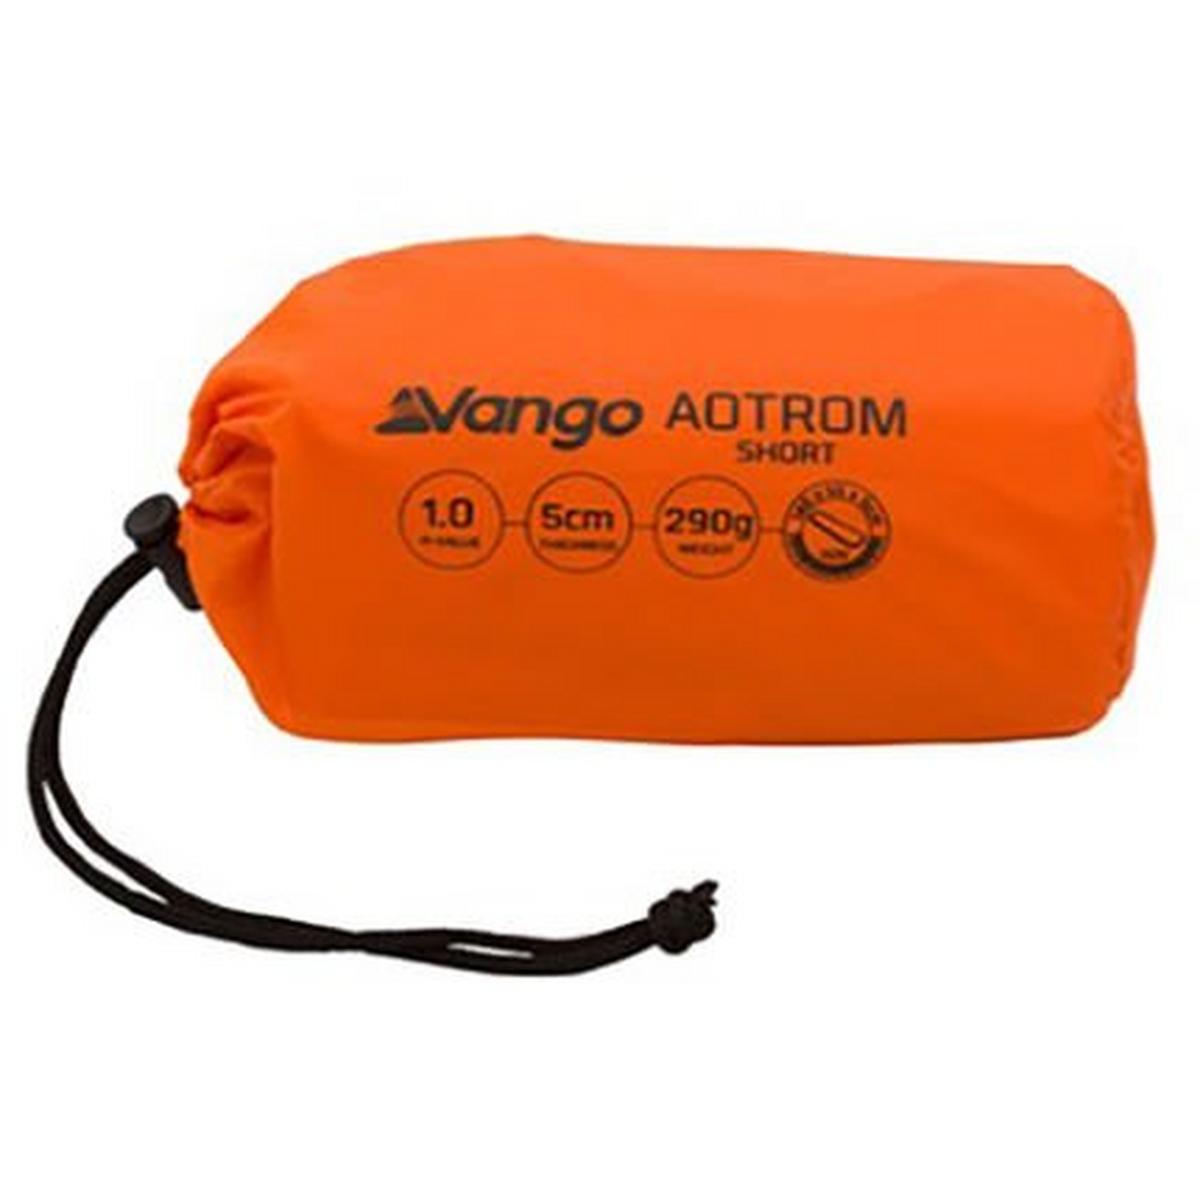 Vango Aotrom Short Sleeping Mat - Orange